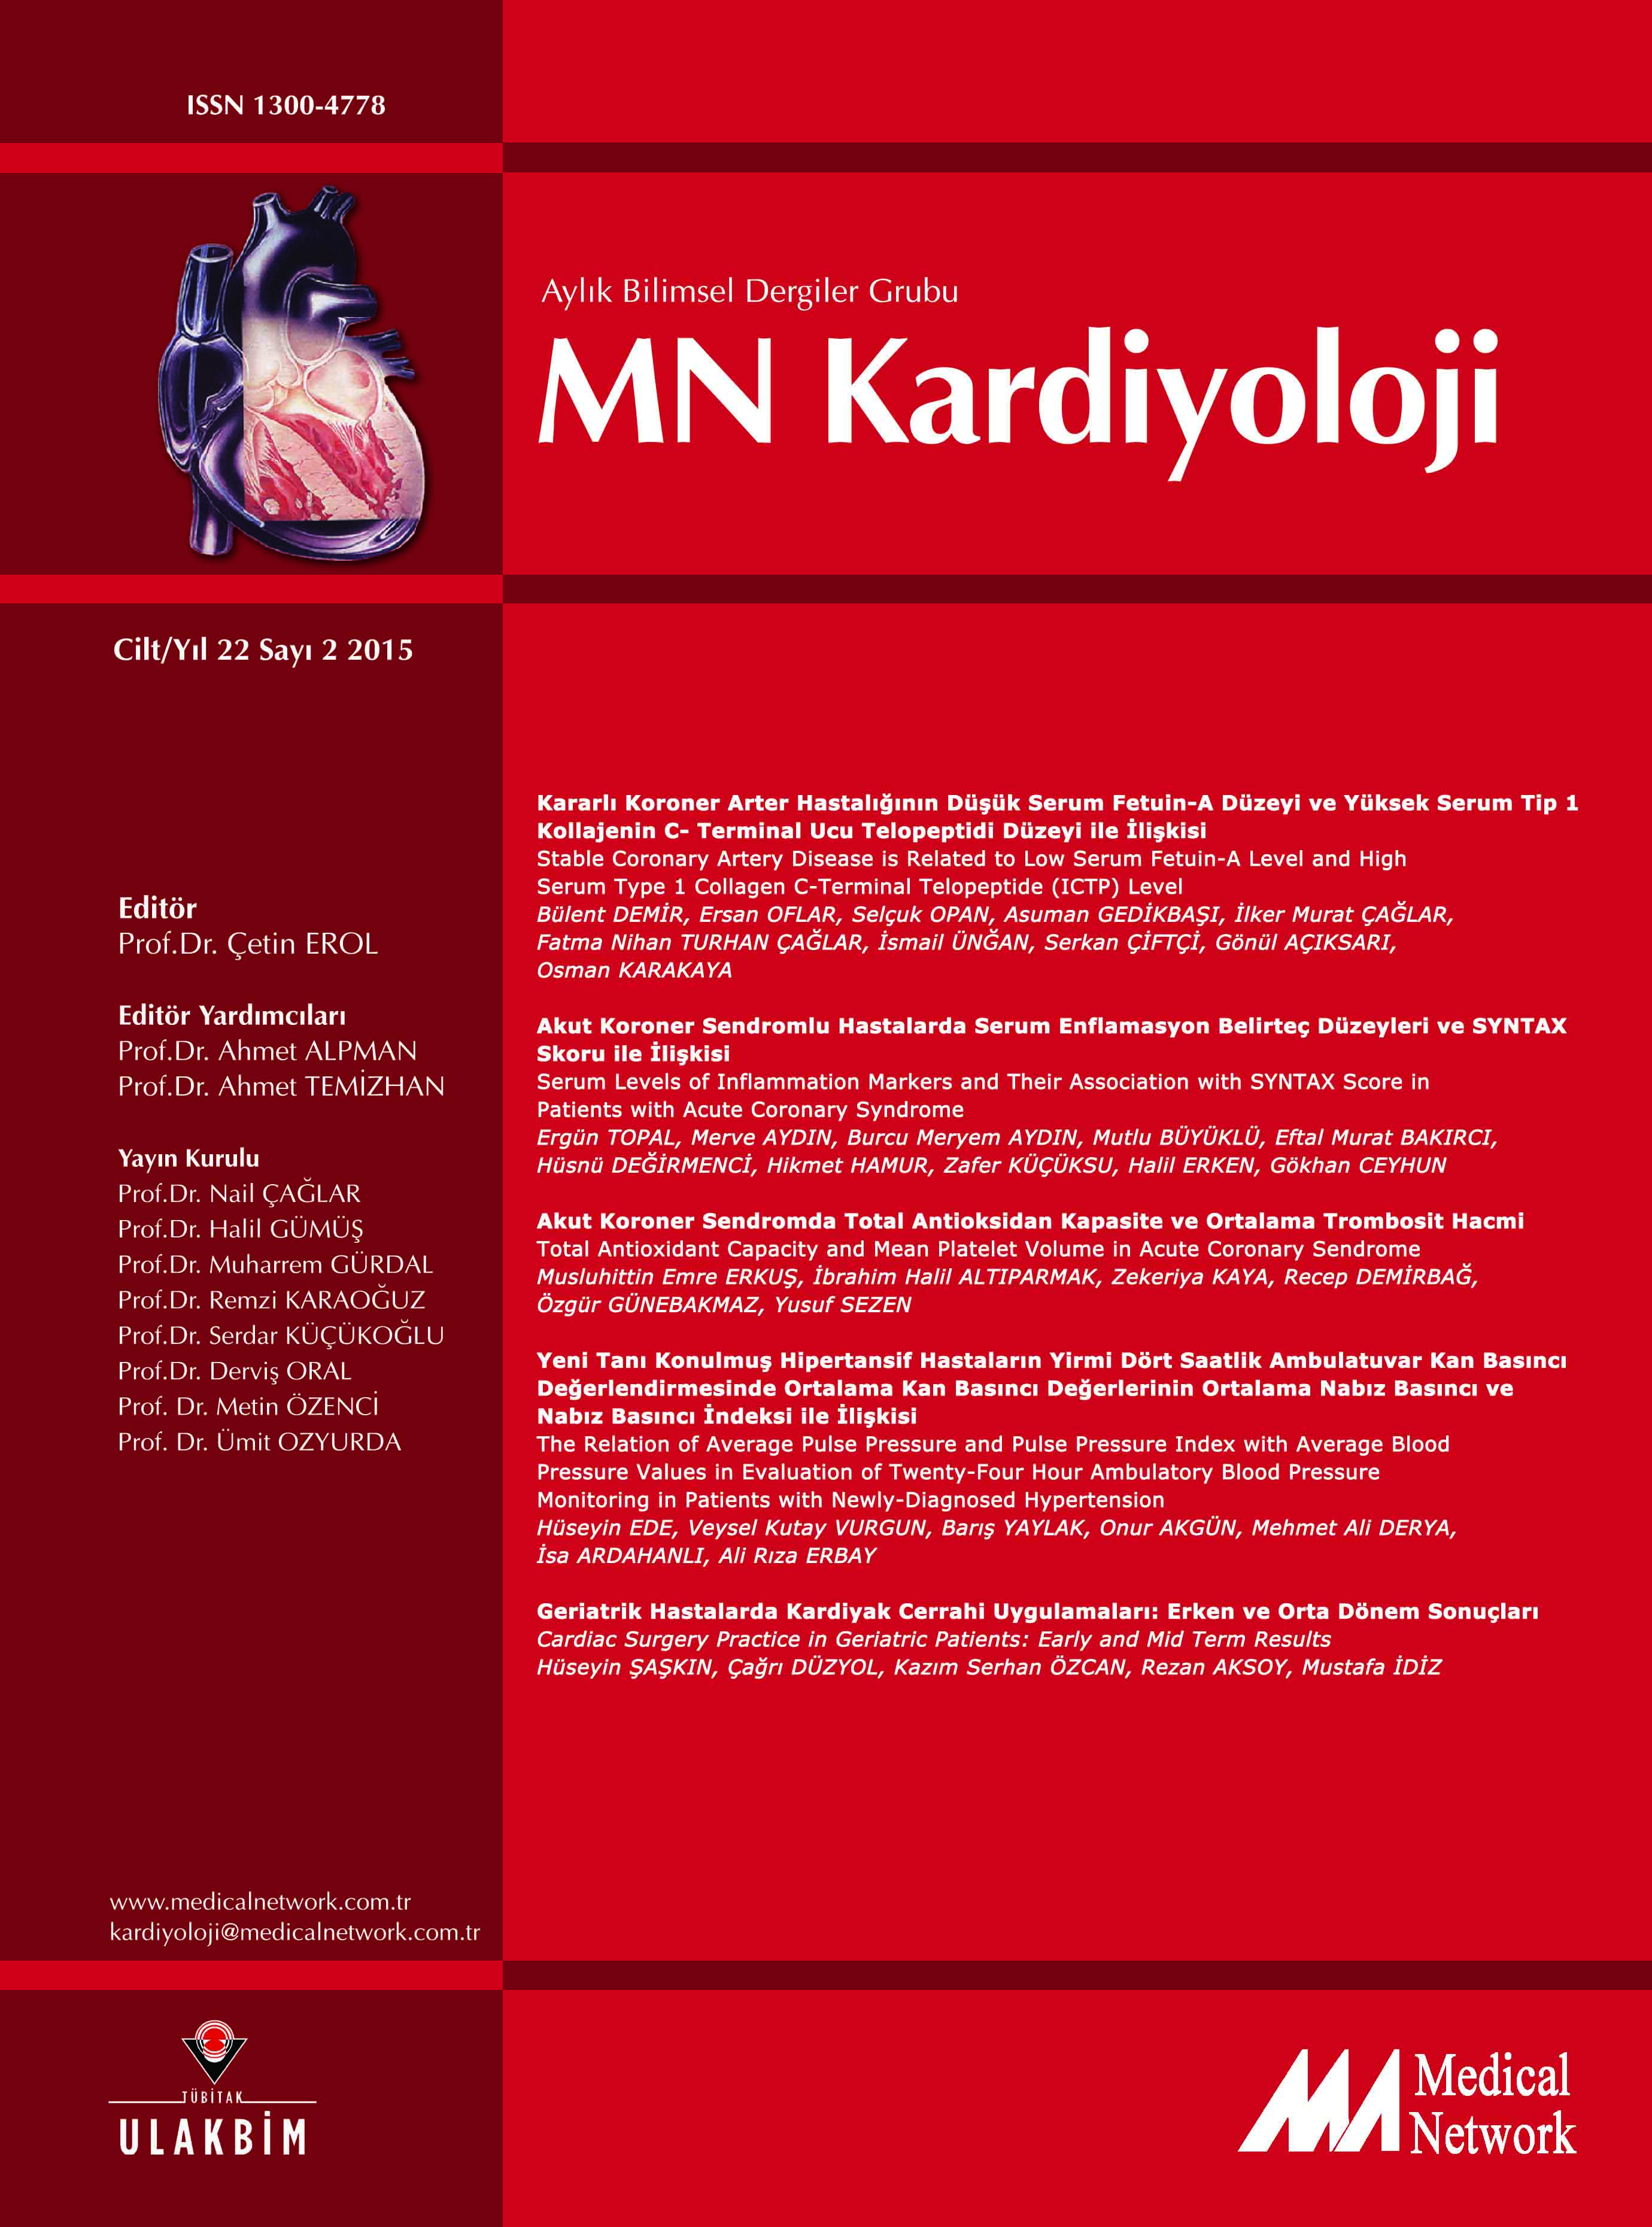 <p>MN Kardiyoloji Cilt: 22 Say: 2 2015 (MN Cardiology Volume: 22 No: 2 2015)</p>